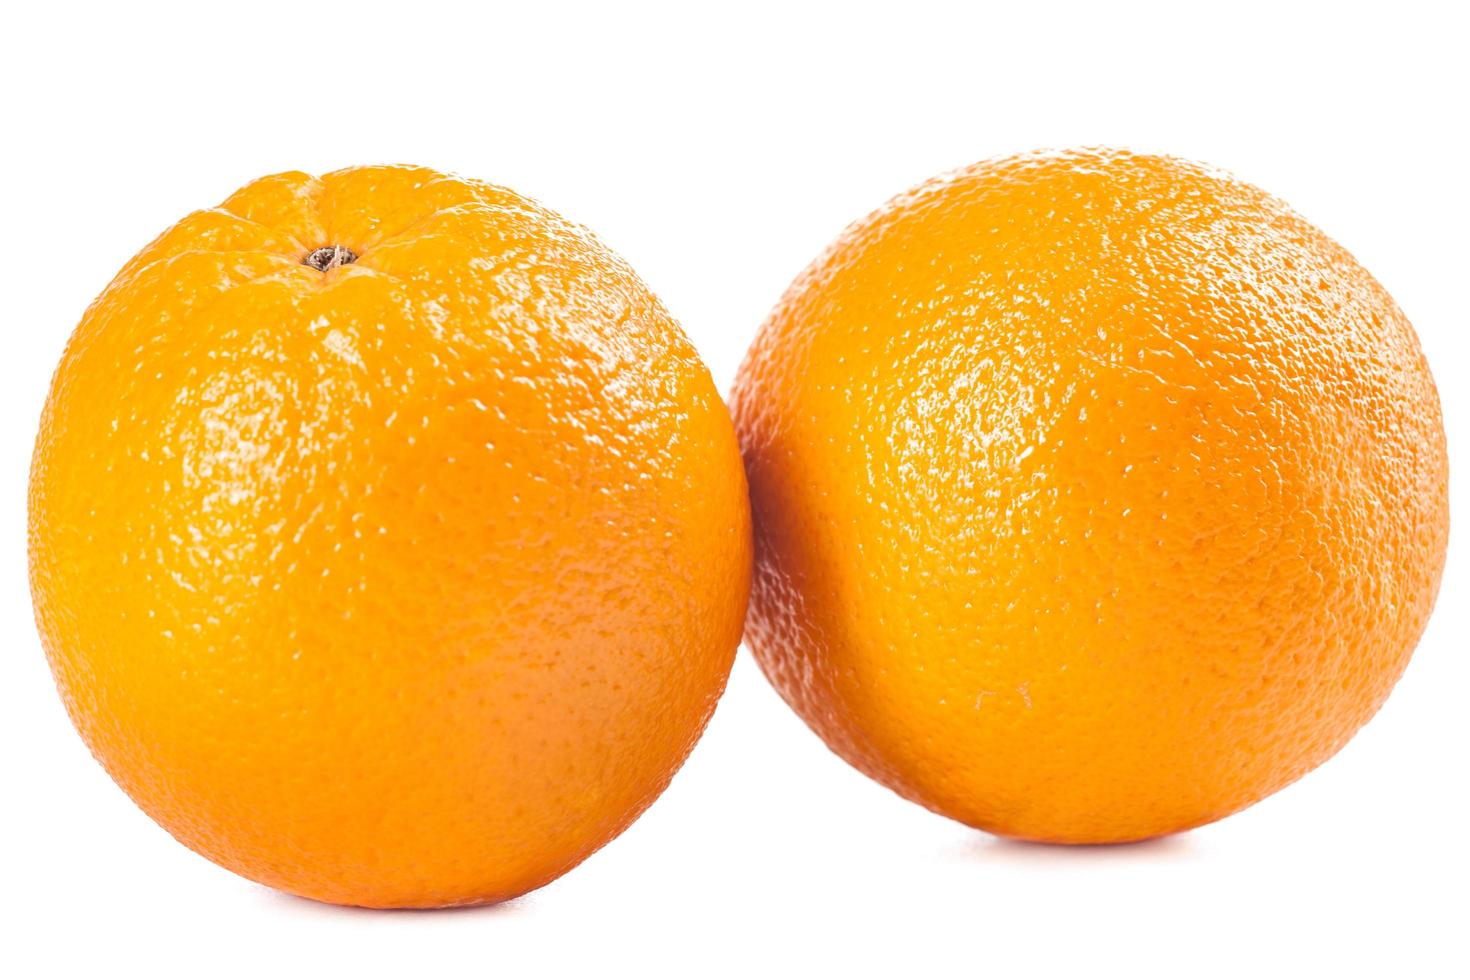 rijpe sinaasappelen op witte achtergrond foto